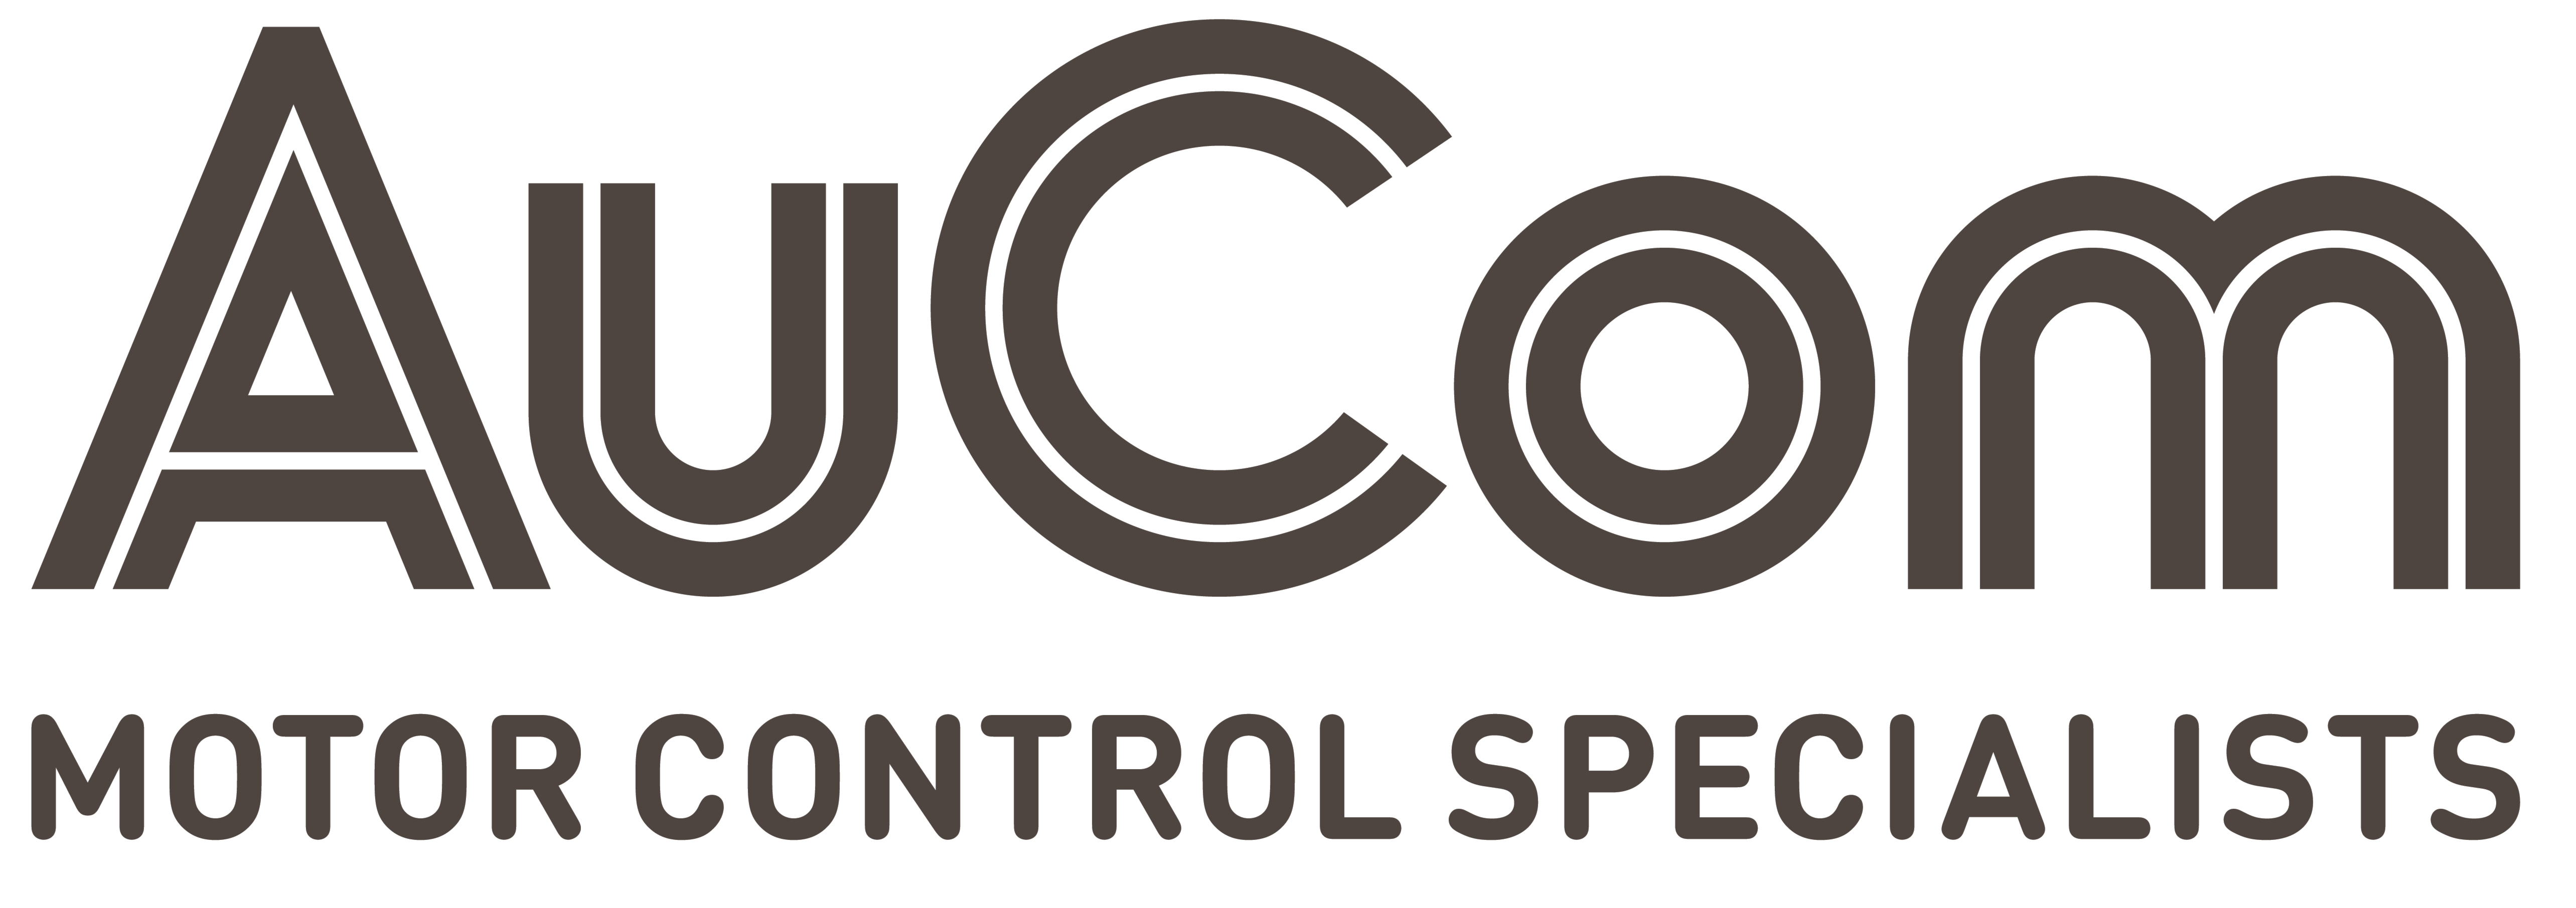 AuCom MCS GmbH & Co. KG.jpg